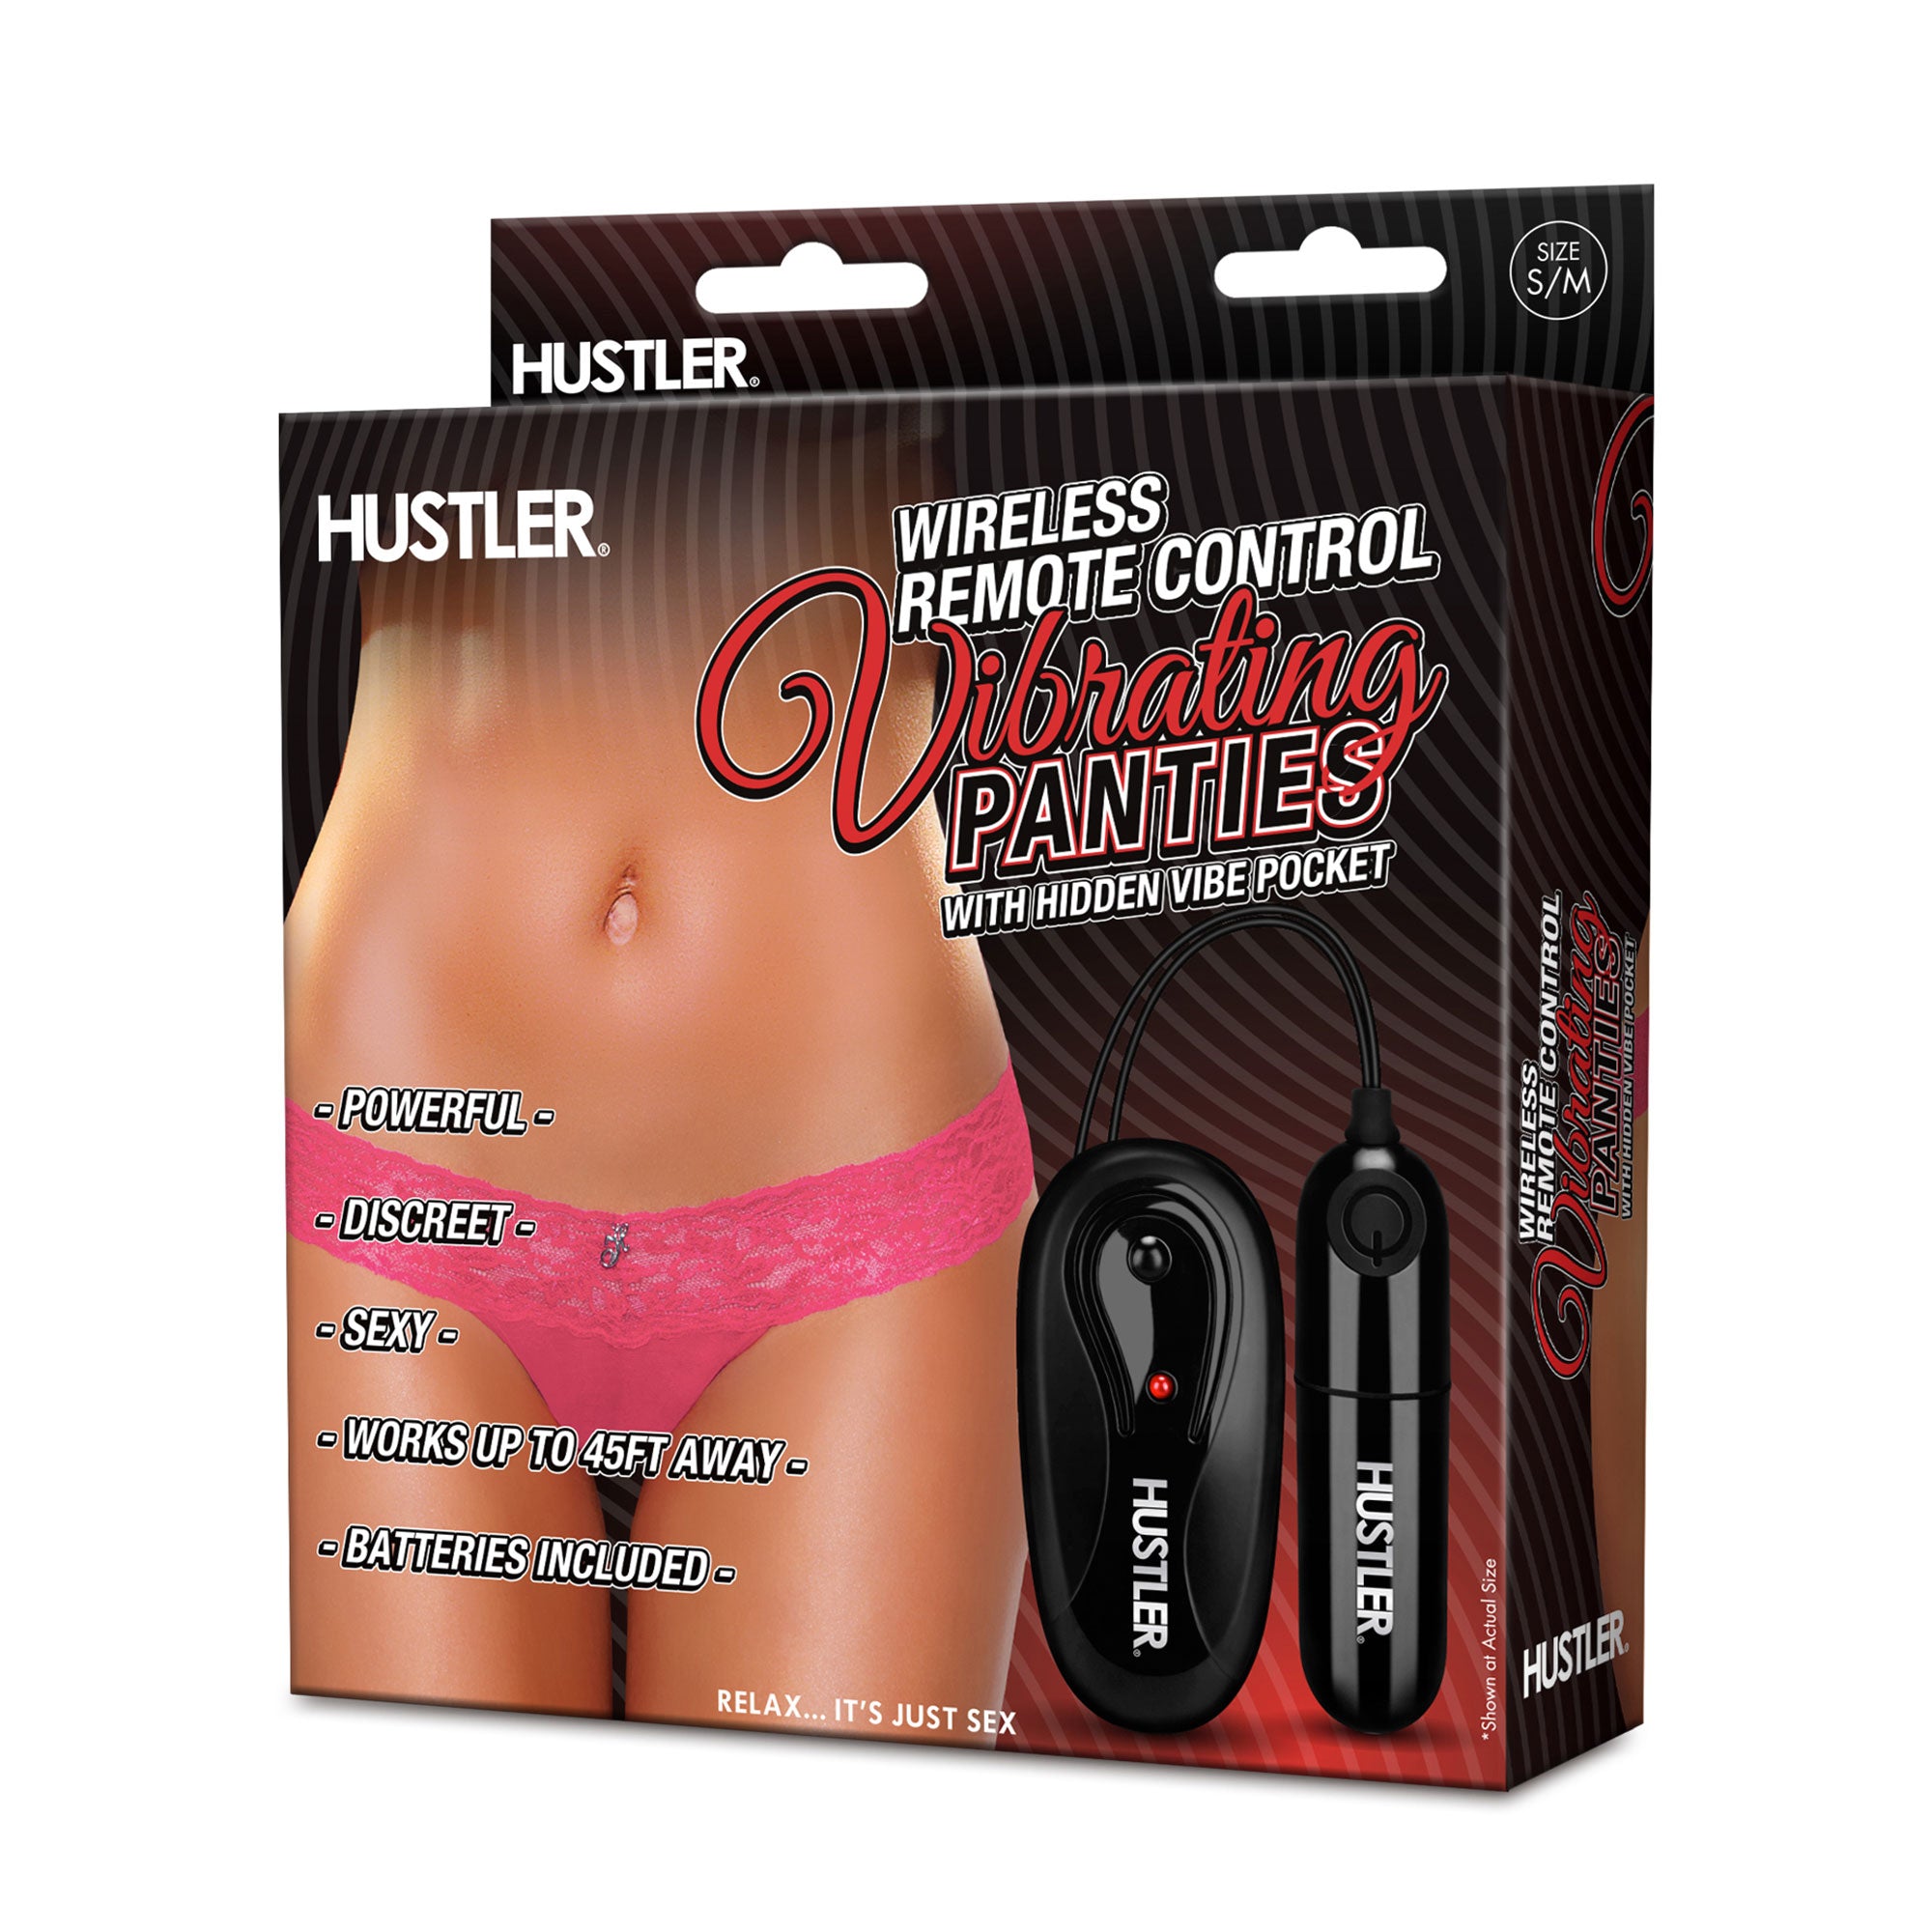 Hustler Wireless Remote Control Vibrating Panties with Hidden Vibe Pocket - Black